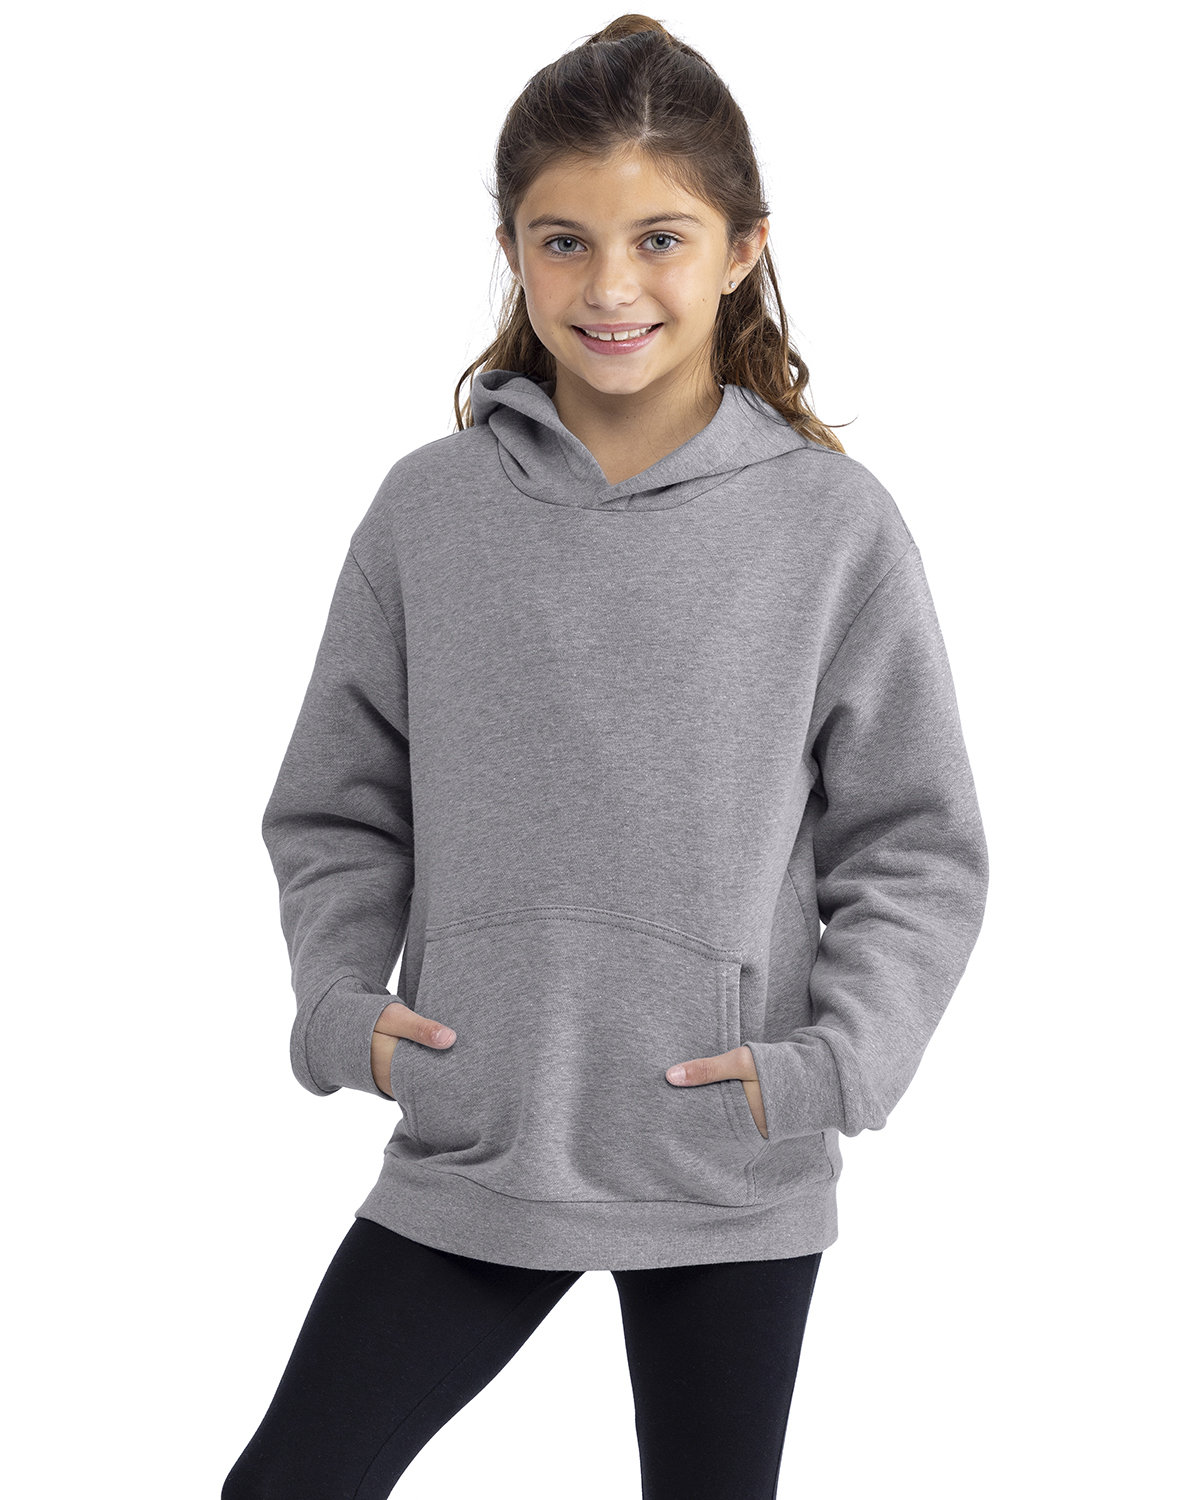 Next Level Apparel Youth Fleece Pullover Hooded Sweatshirt | alphabroder